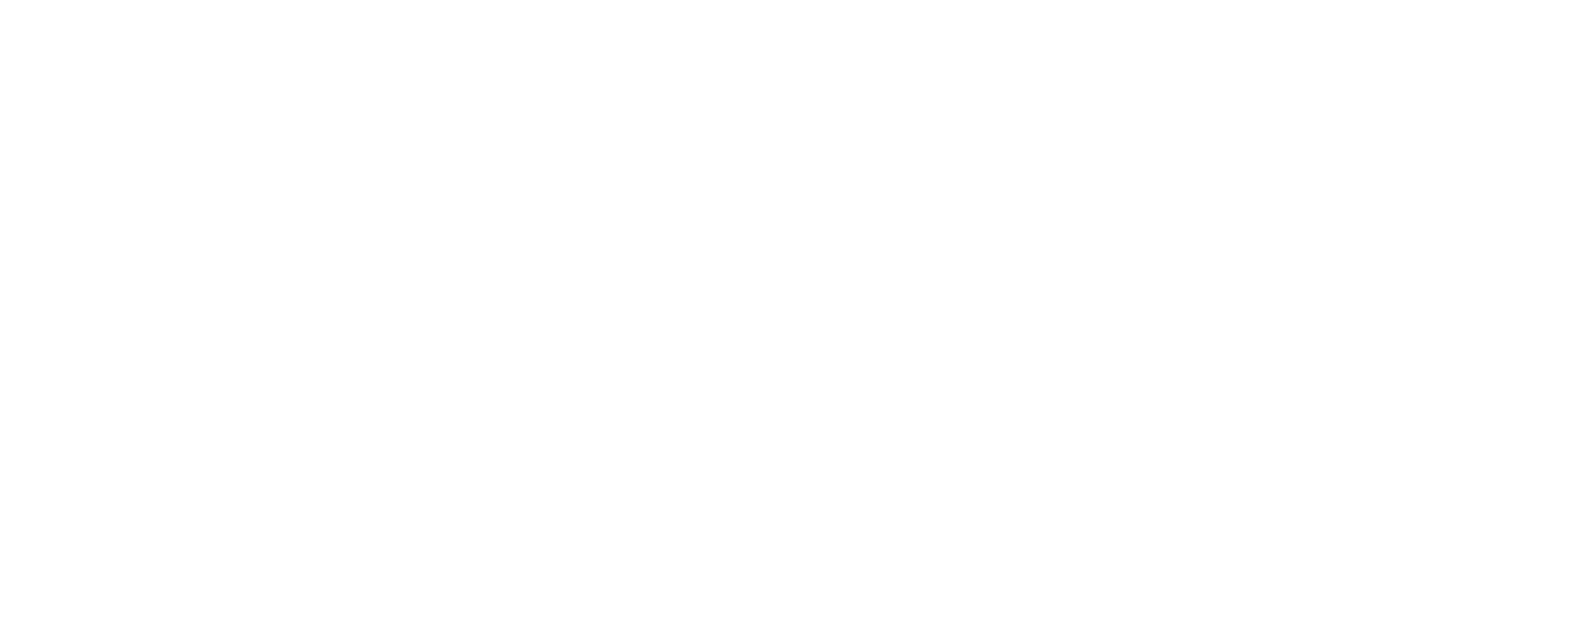 Thryv logo large for dark backgrounds (transparent PNG)